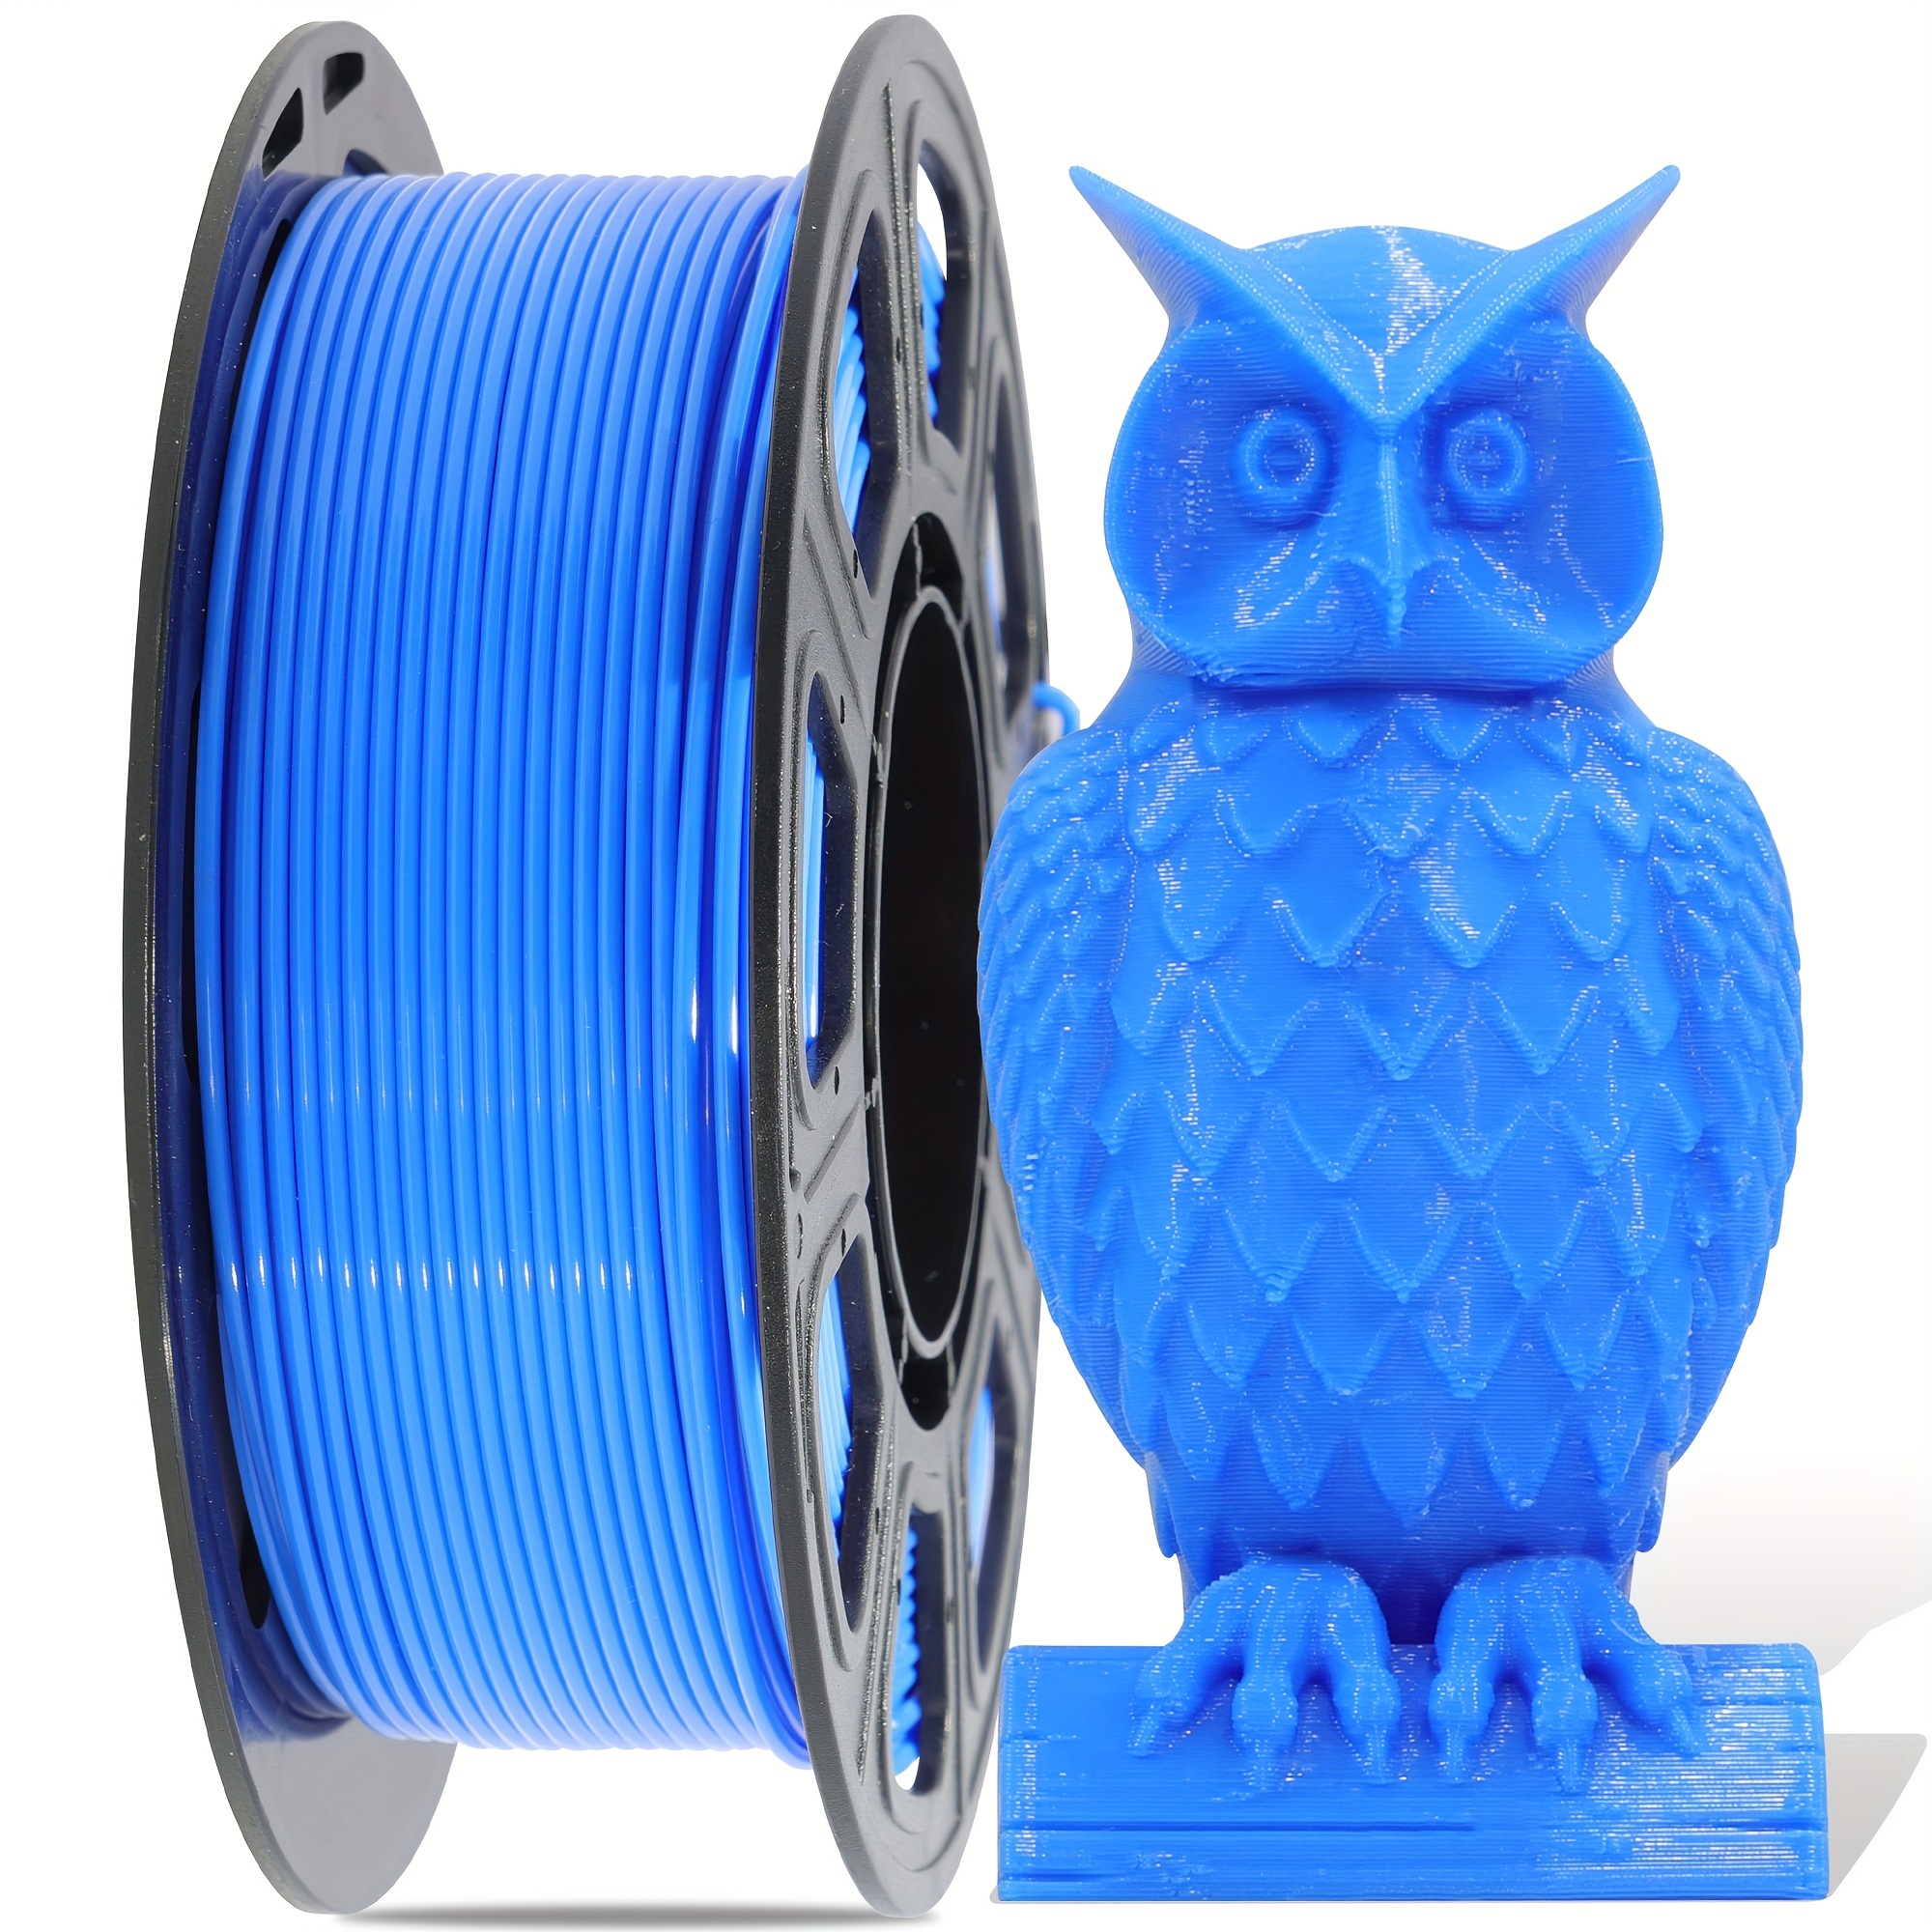 Filament D'imprimante 3D Bicolore En Soie PLA Matériau - Temu Belgium